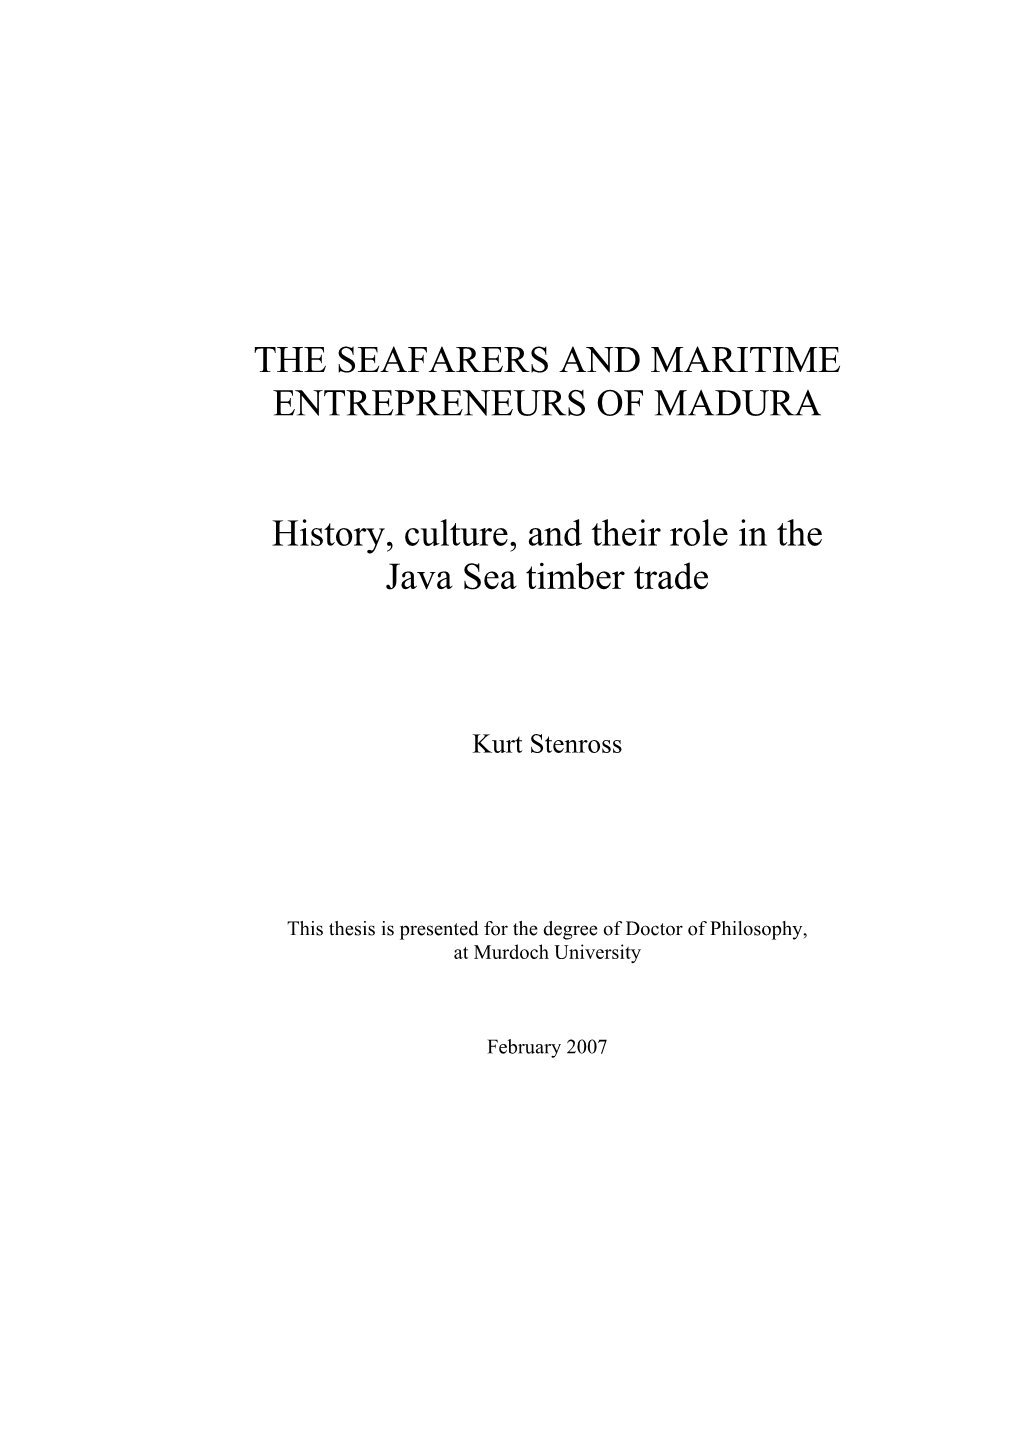 The Seafarers and Maritime Entrepreneurs of Madura